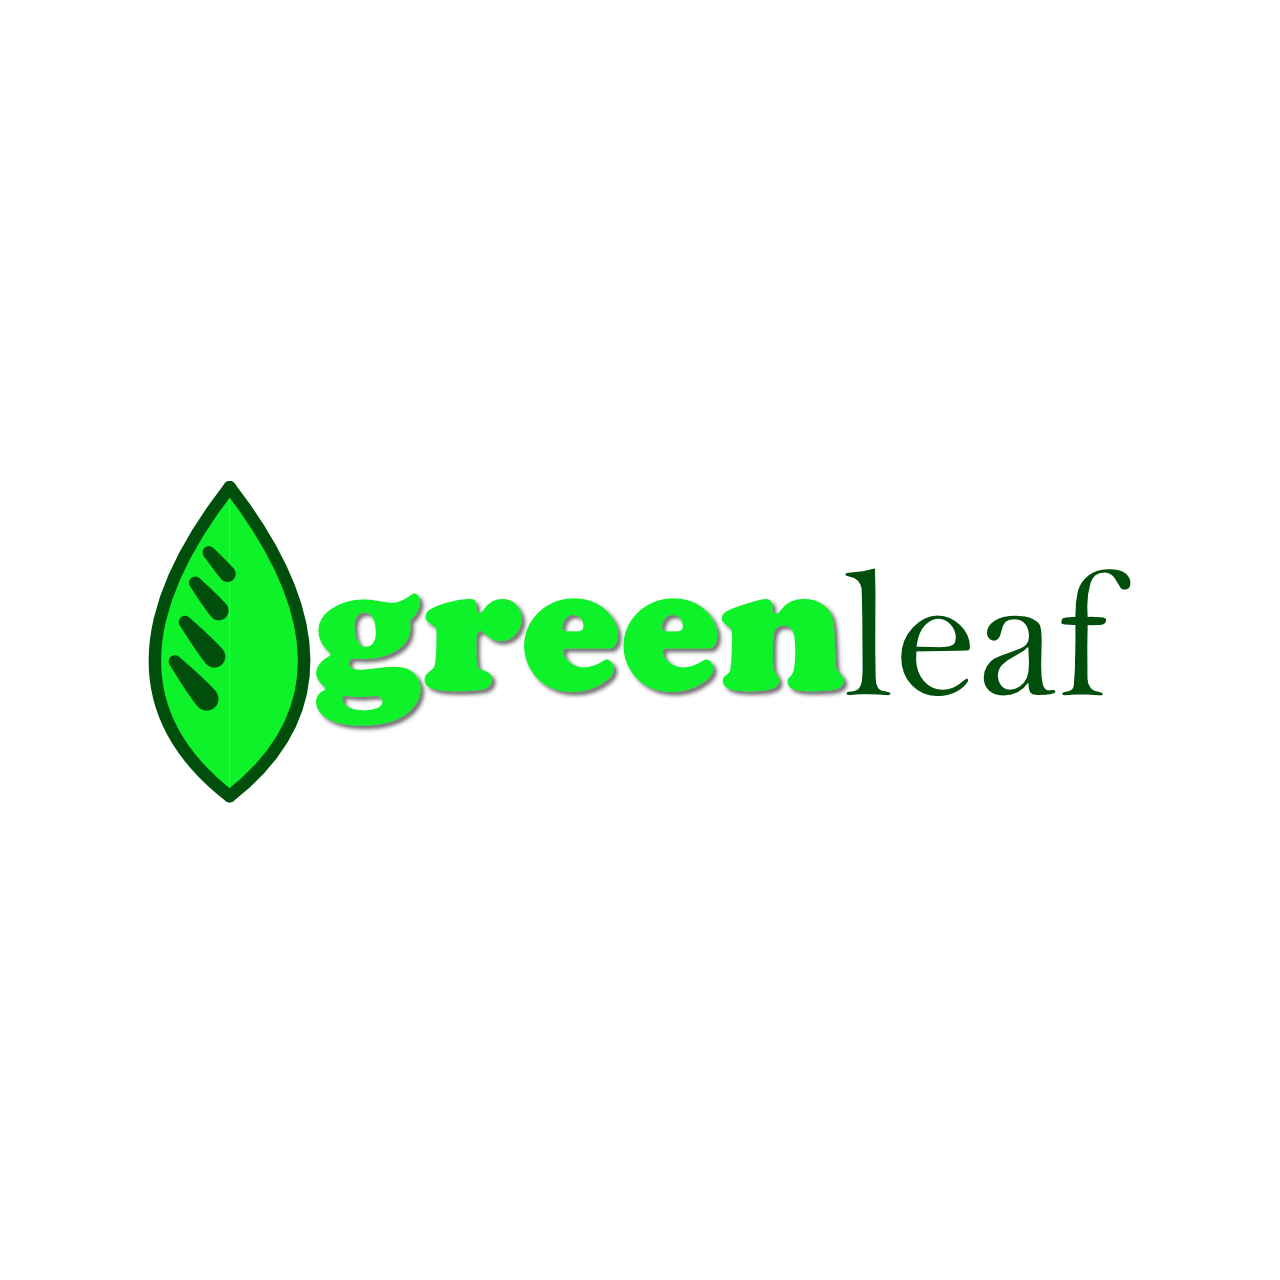 Brand logo for the Greenleaf company.